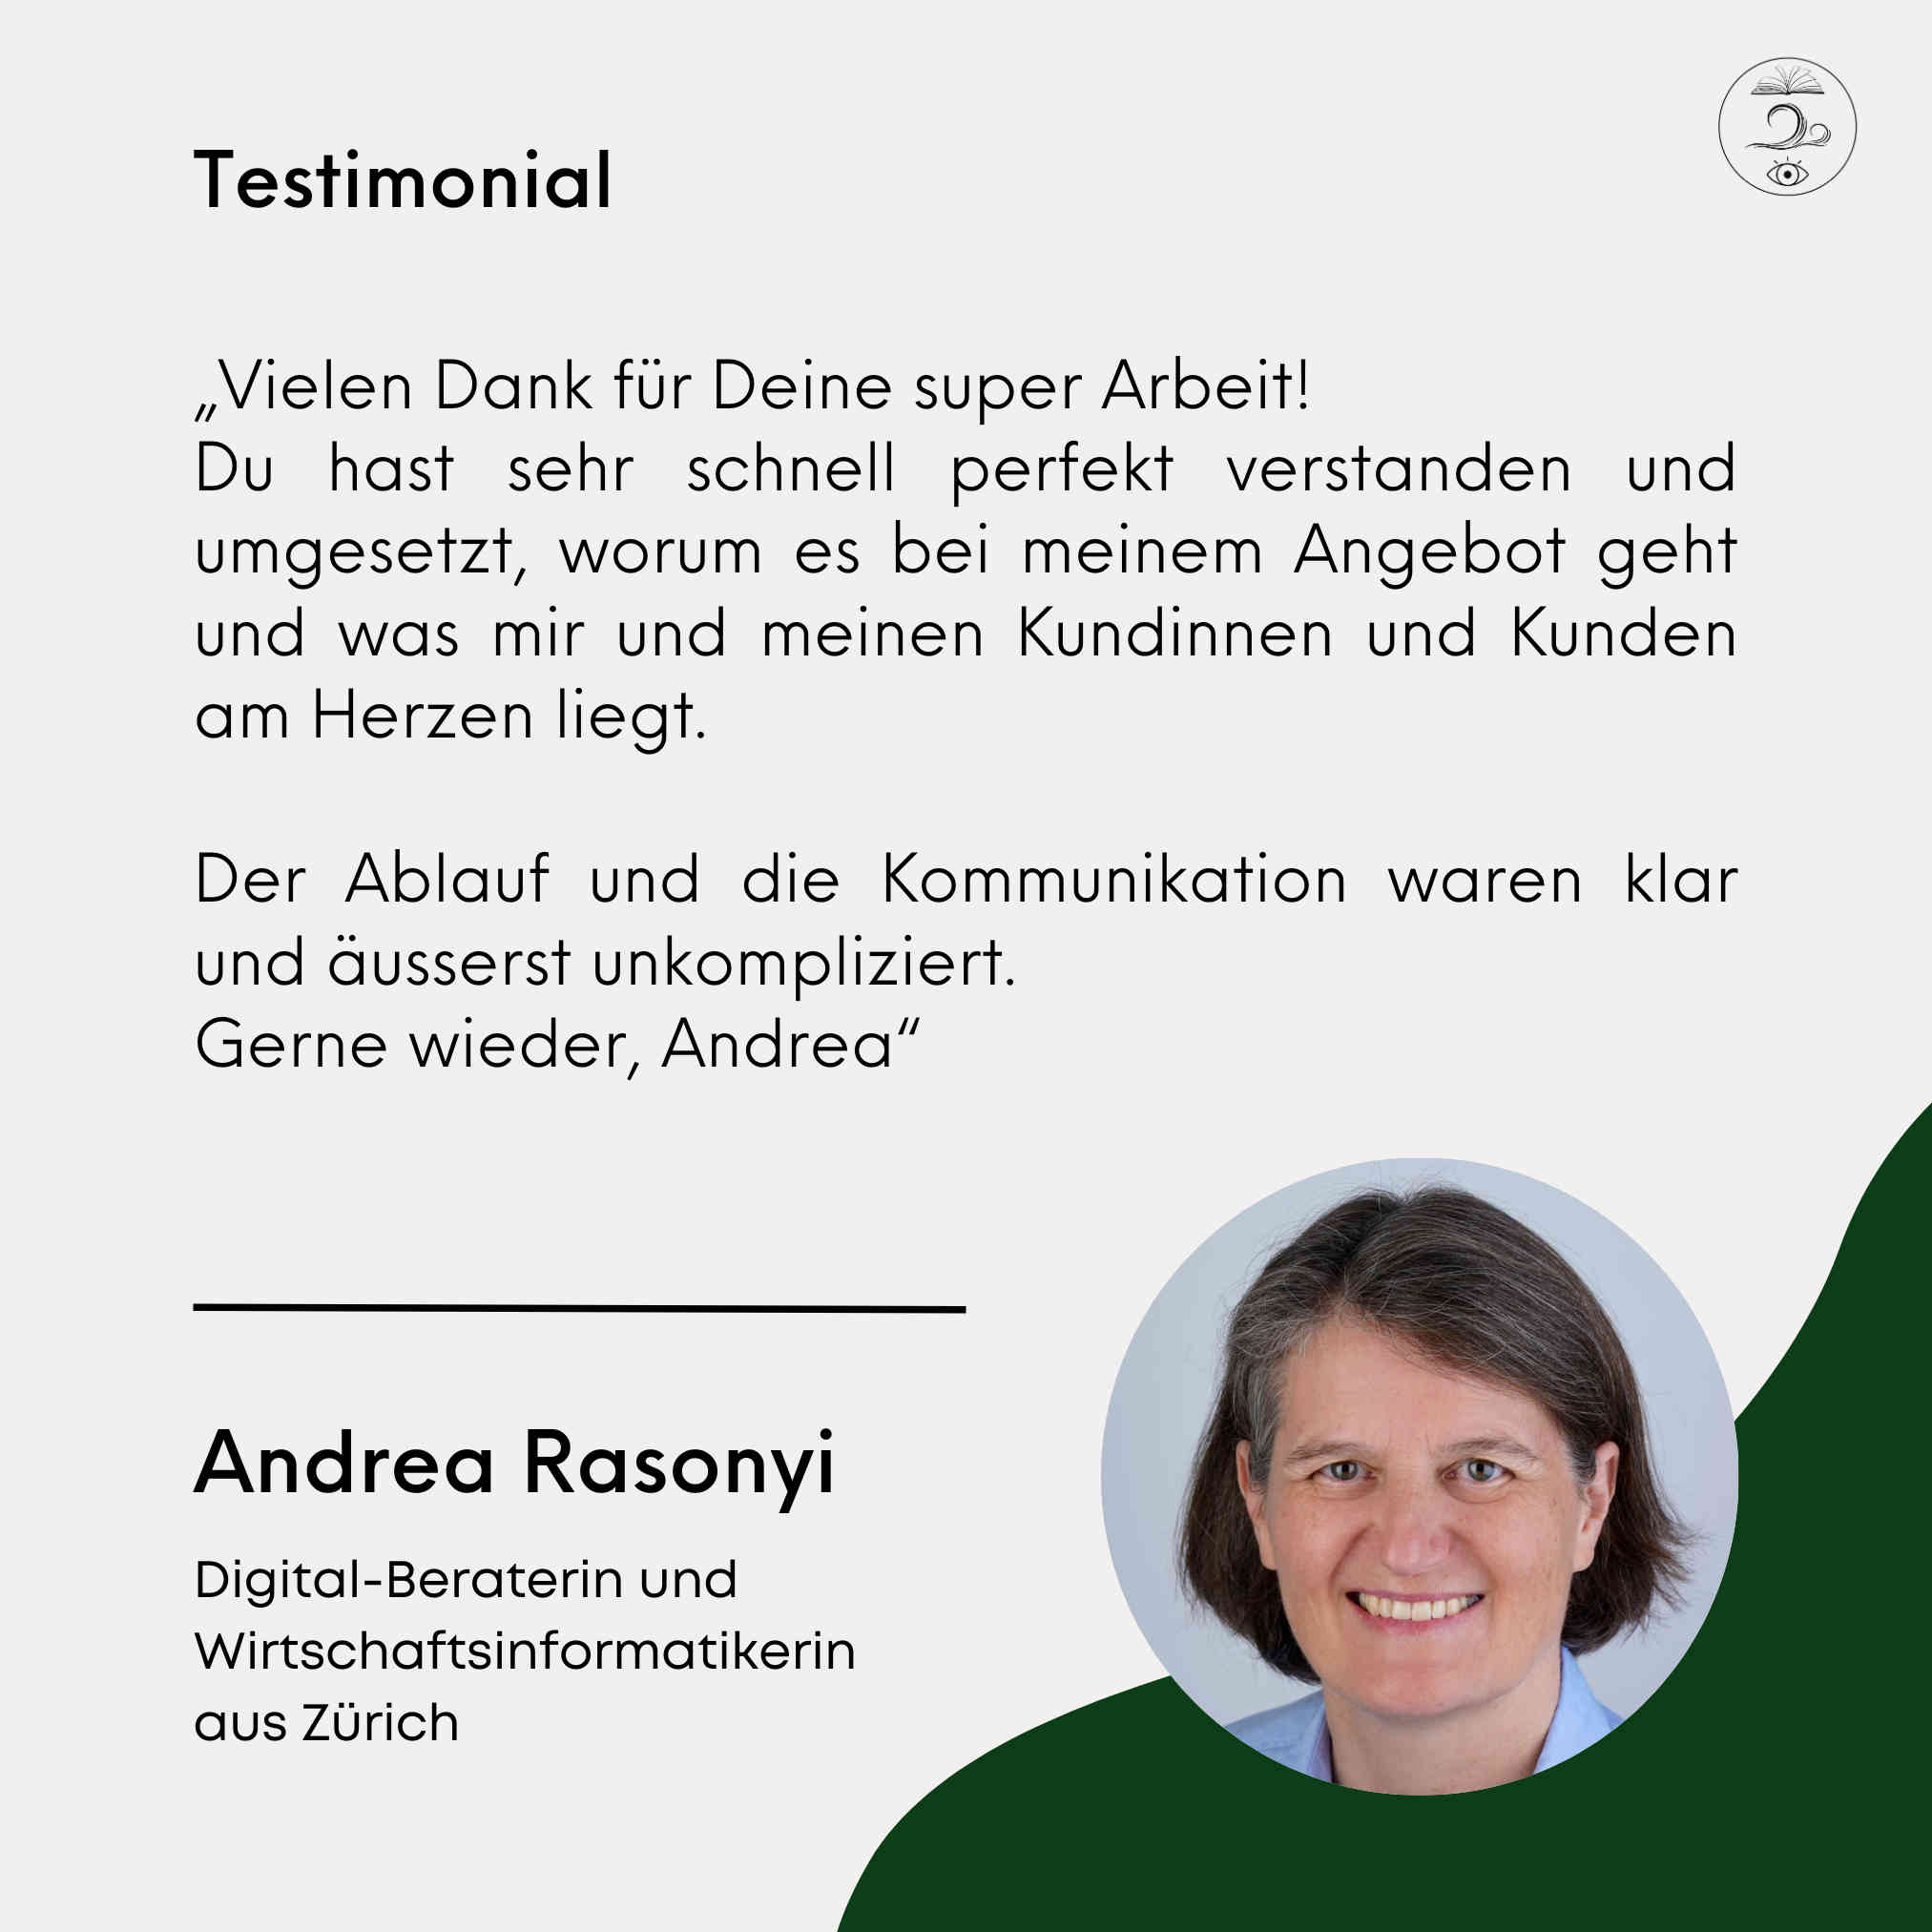 Testimonial / Referenz Andrea Rasonyi, Digital-Beraterin